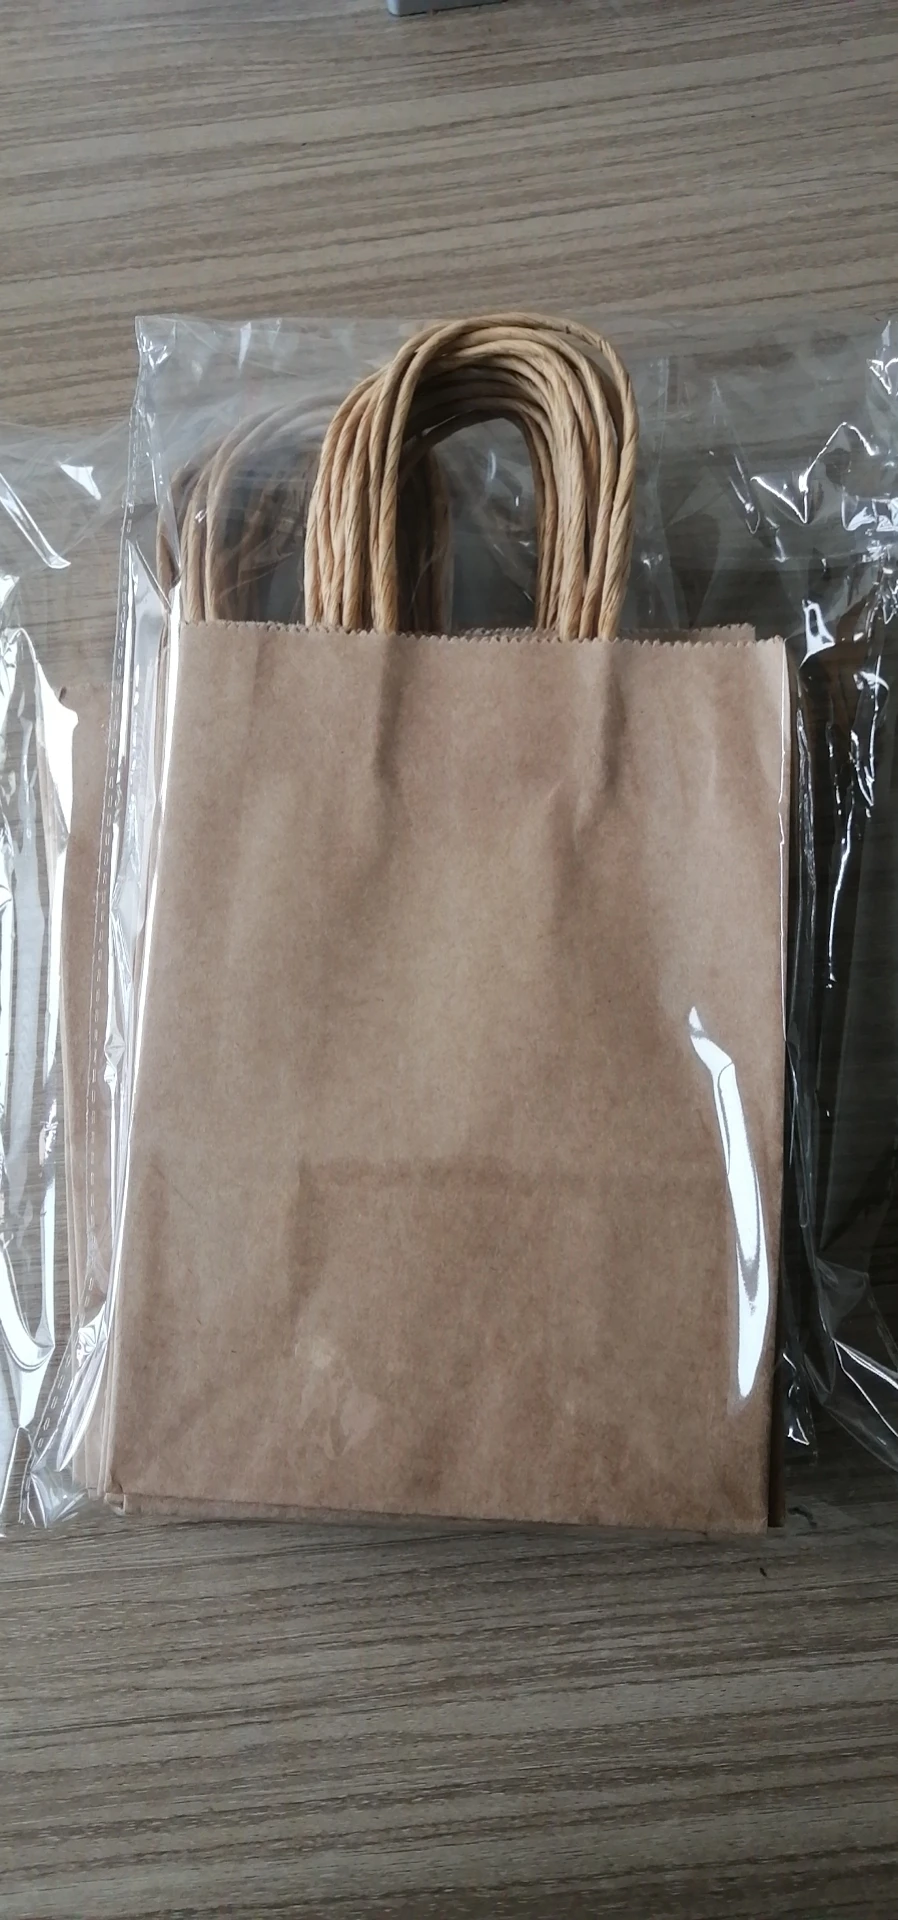 paper bags for food takeaway